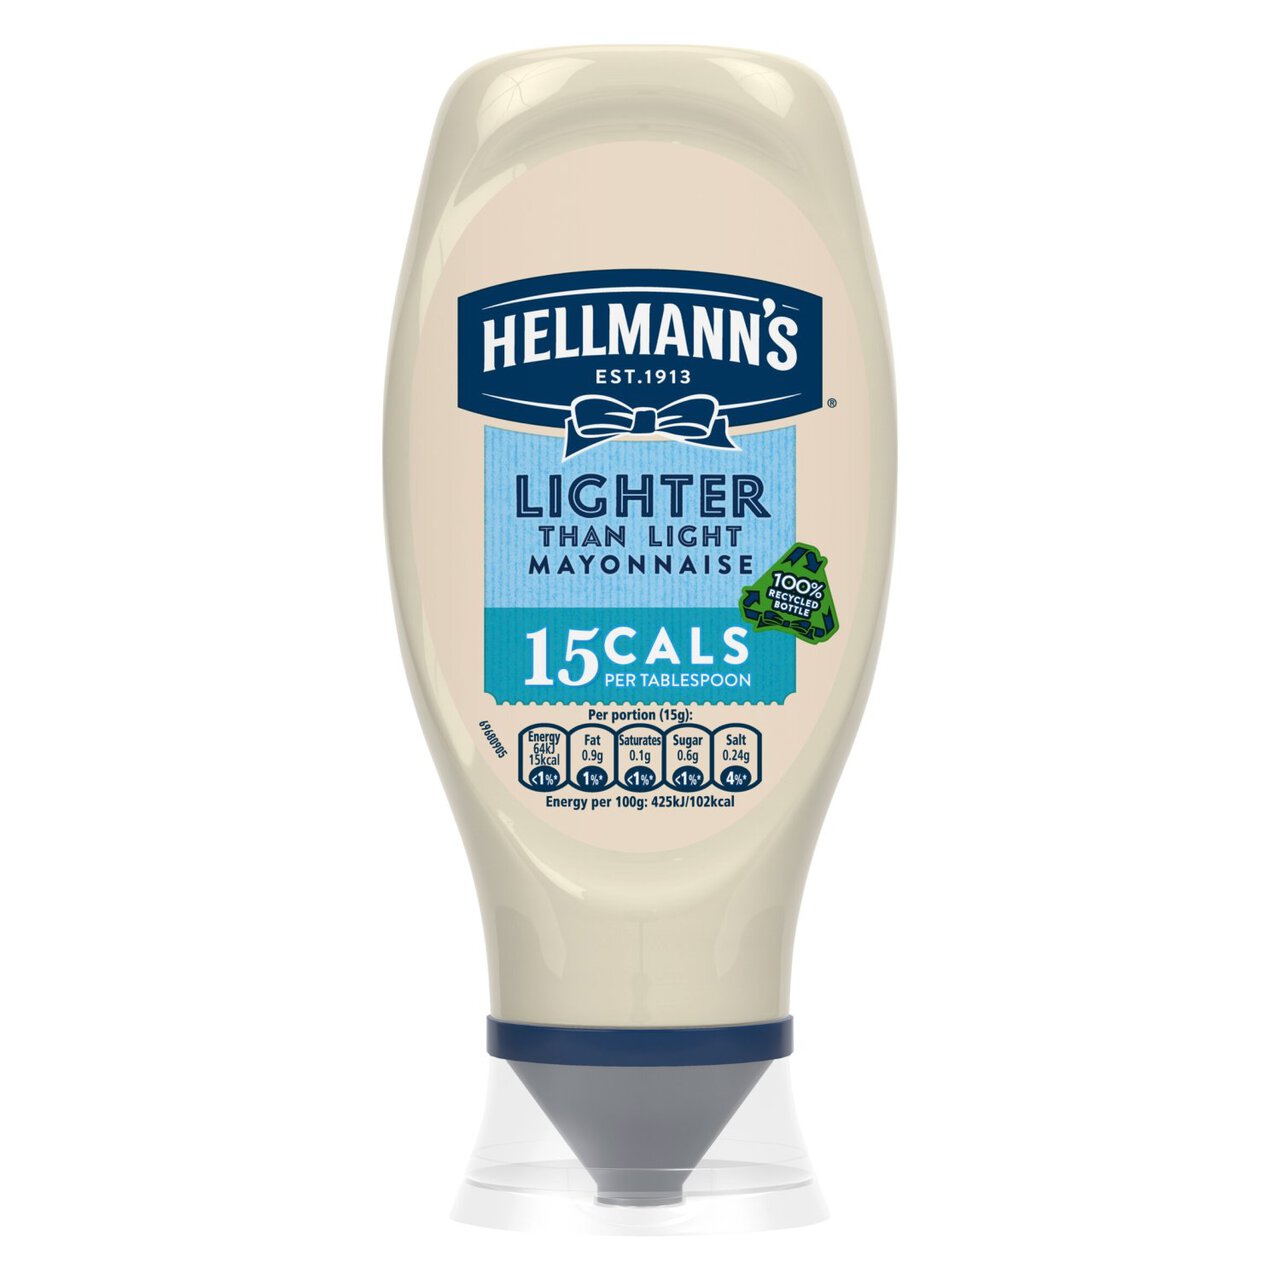 Hellmann's Lighter than Light Squeezy Mayonnaise 430ml